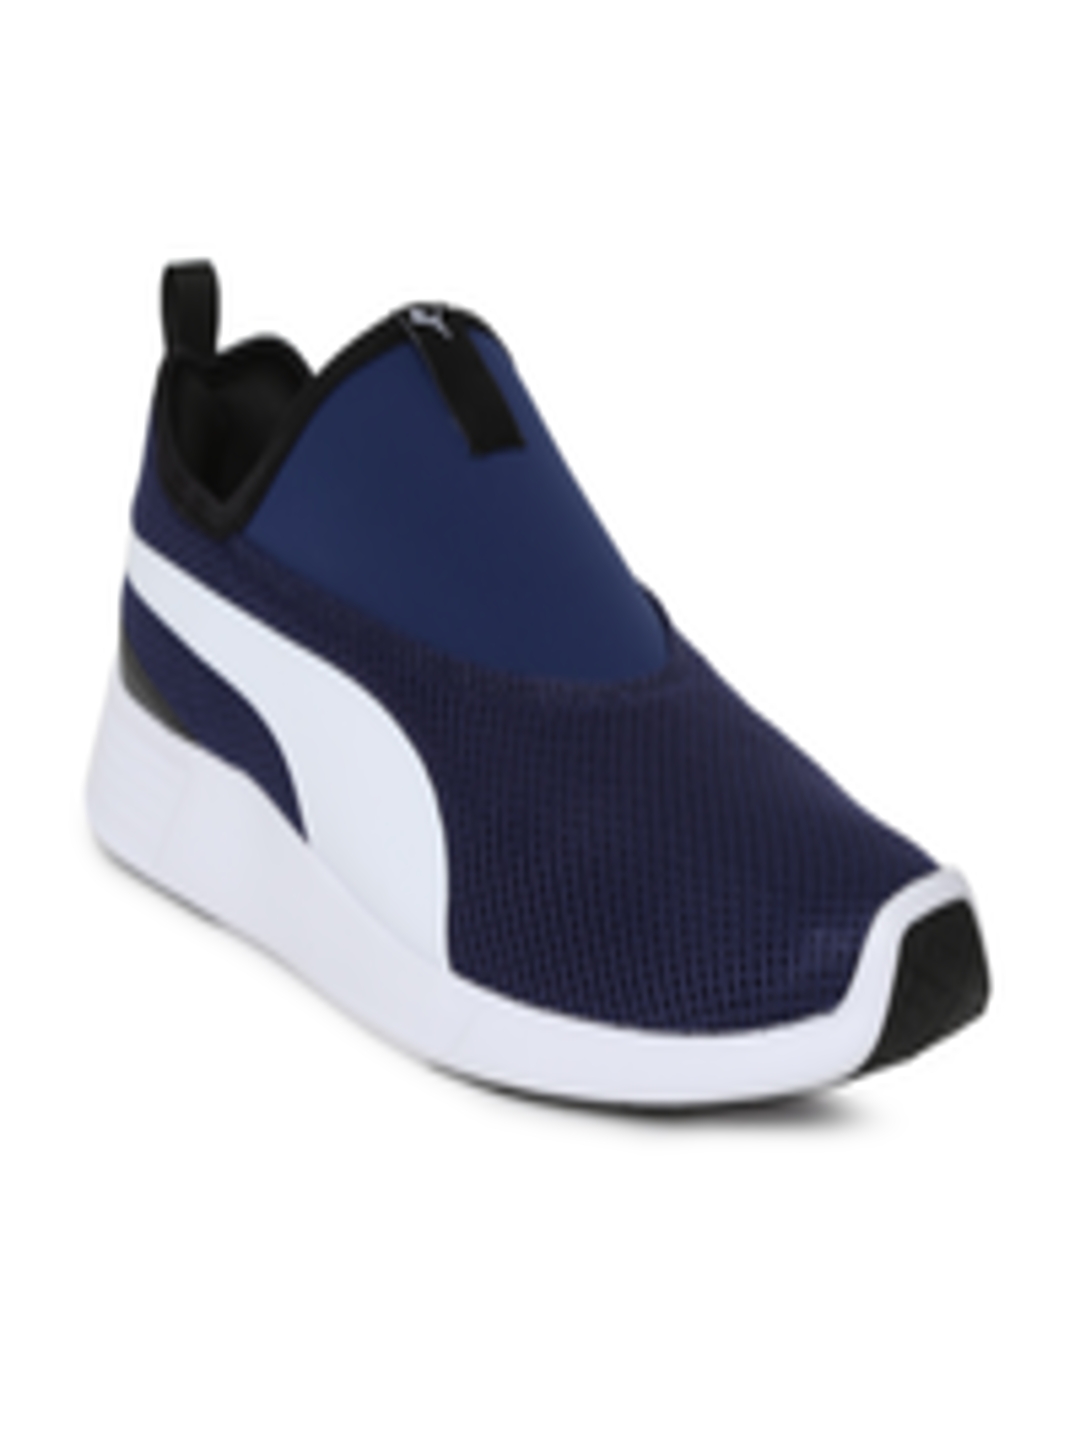 Buy Puma Unisex Navy Blue Slip On ST Trainer Evo V2 IDP Sneakers ...